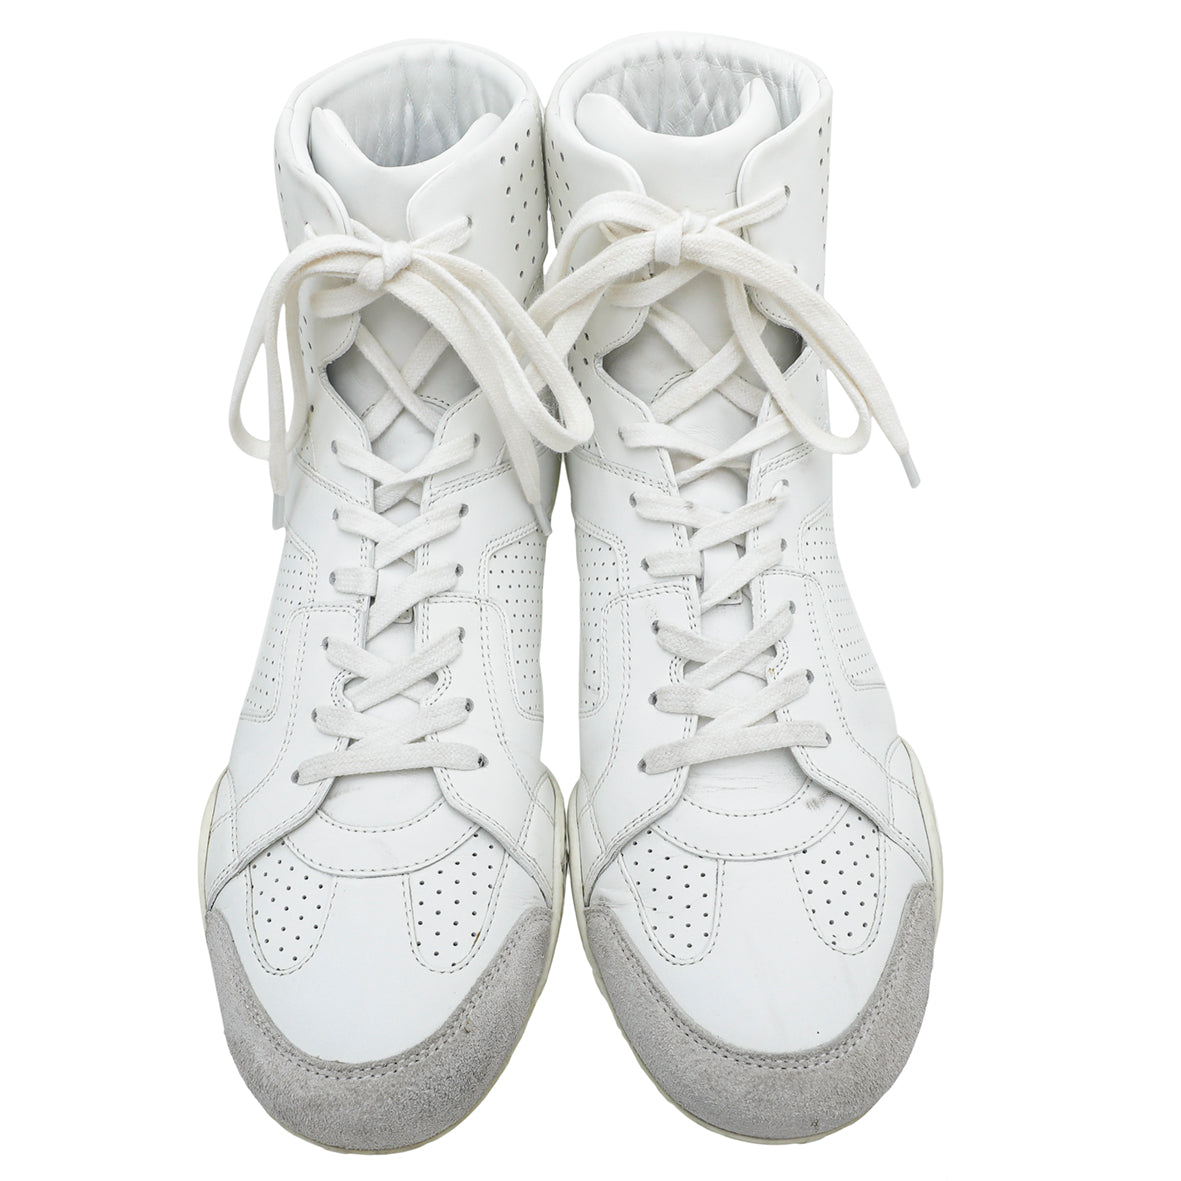 Christian Dior Bicolor J'adior D-Fence Sneaker Boots 40